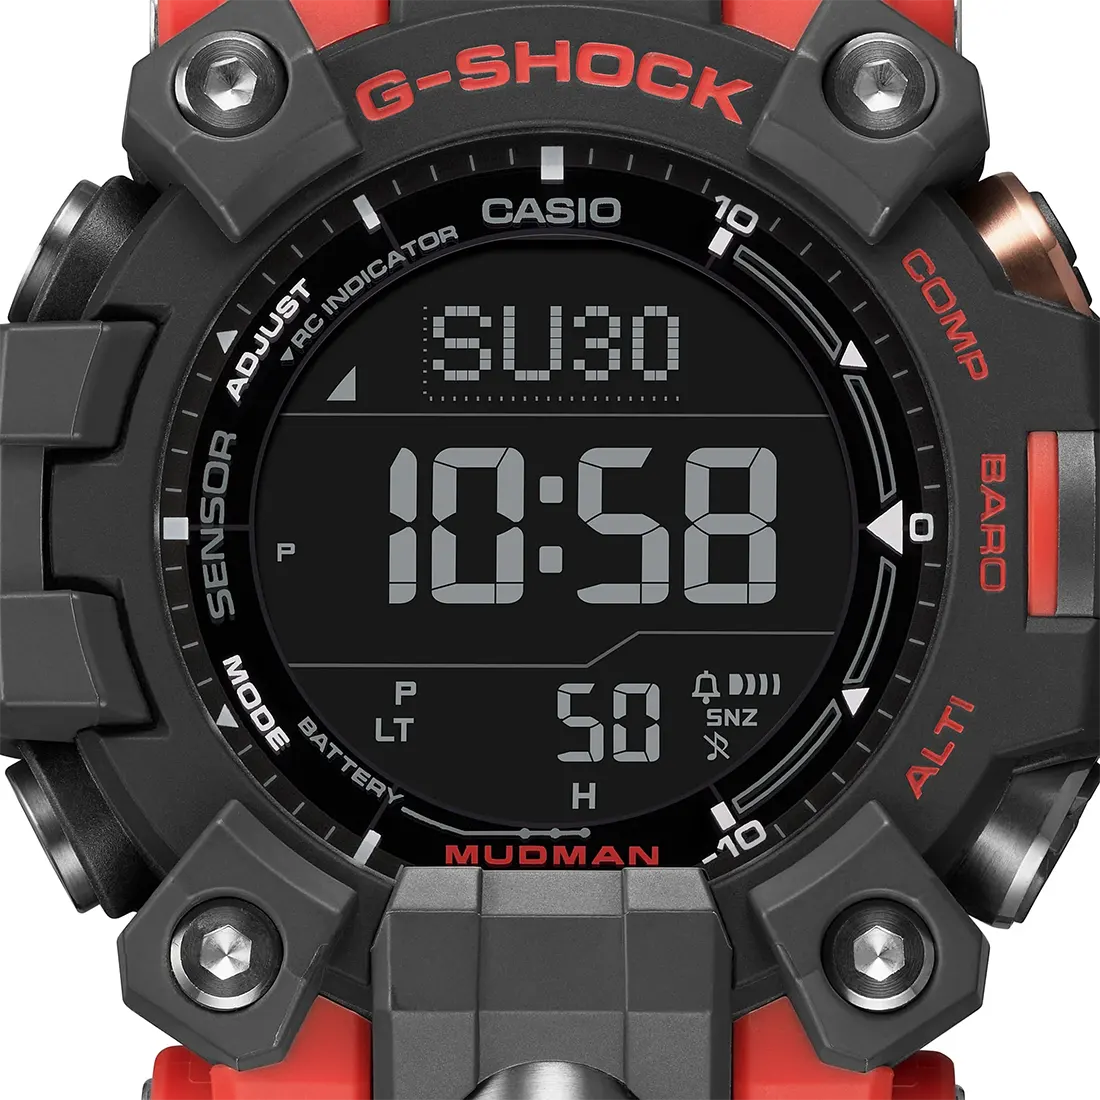 CASIO G-Shock Master Of G-Land Mudman Black Rubber Strap GW-9500-1A4